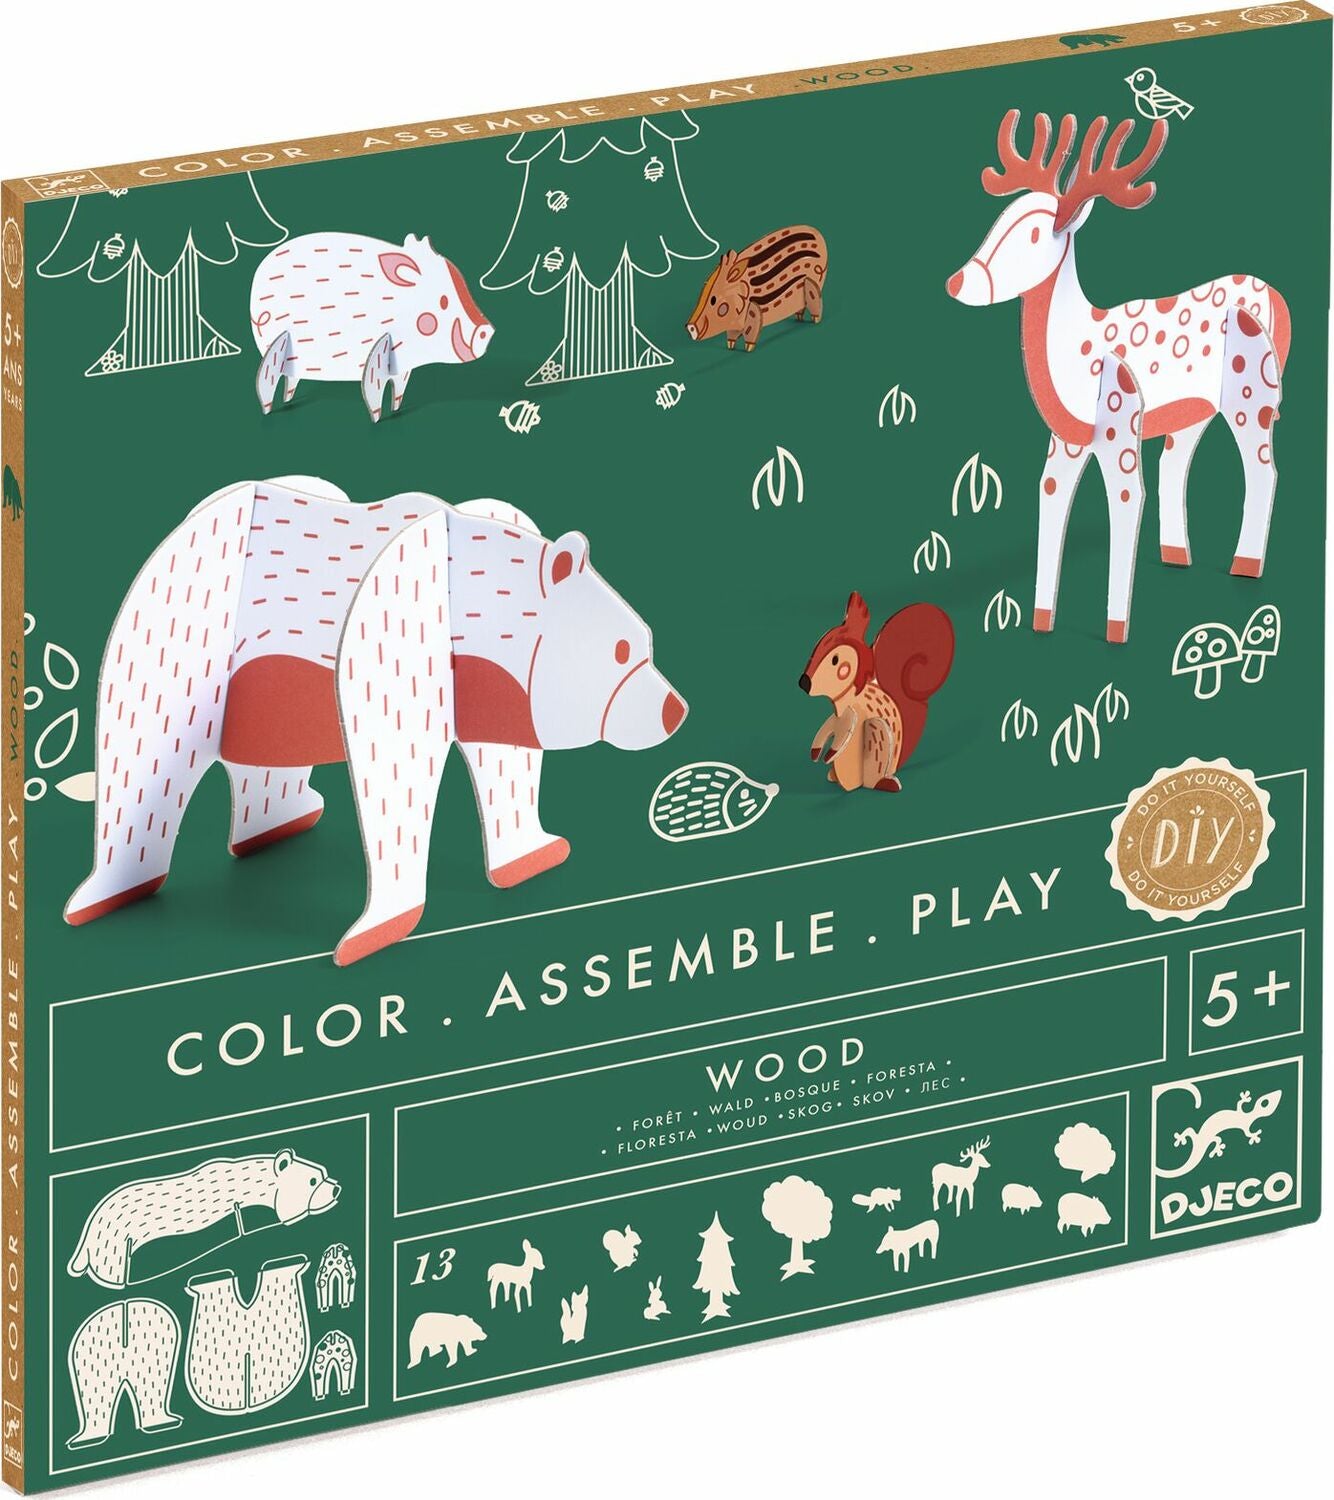 DIY Color Assemble Play Craft Kit: Wood